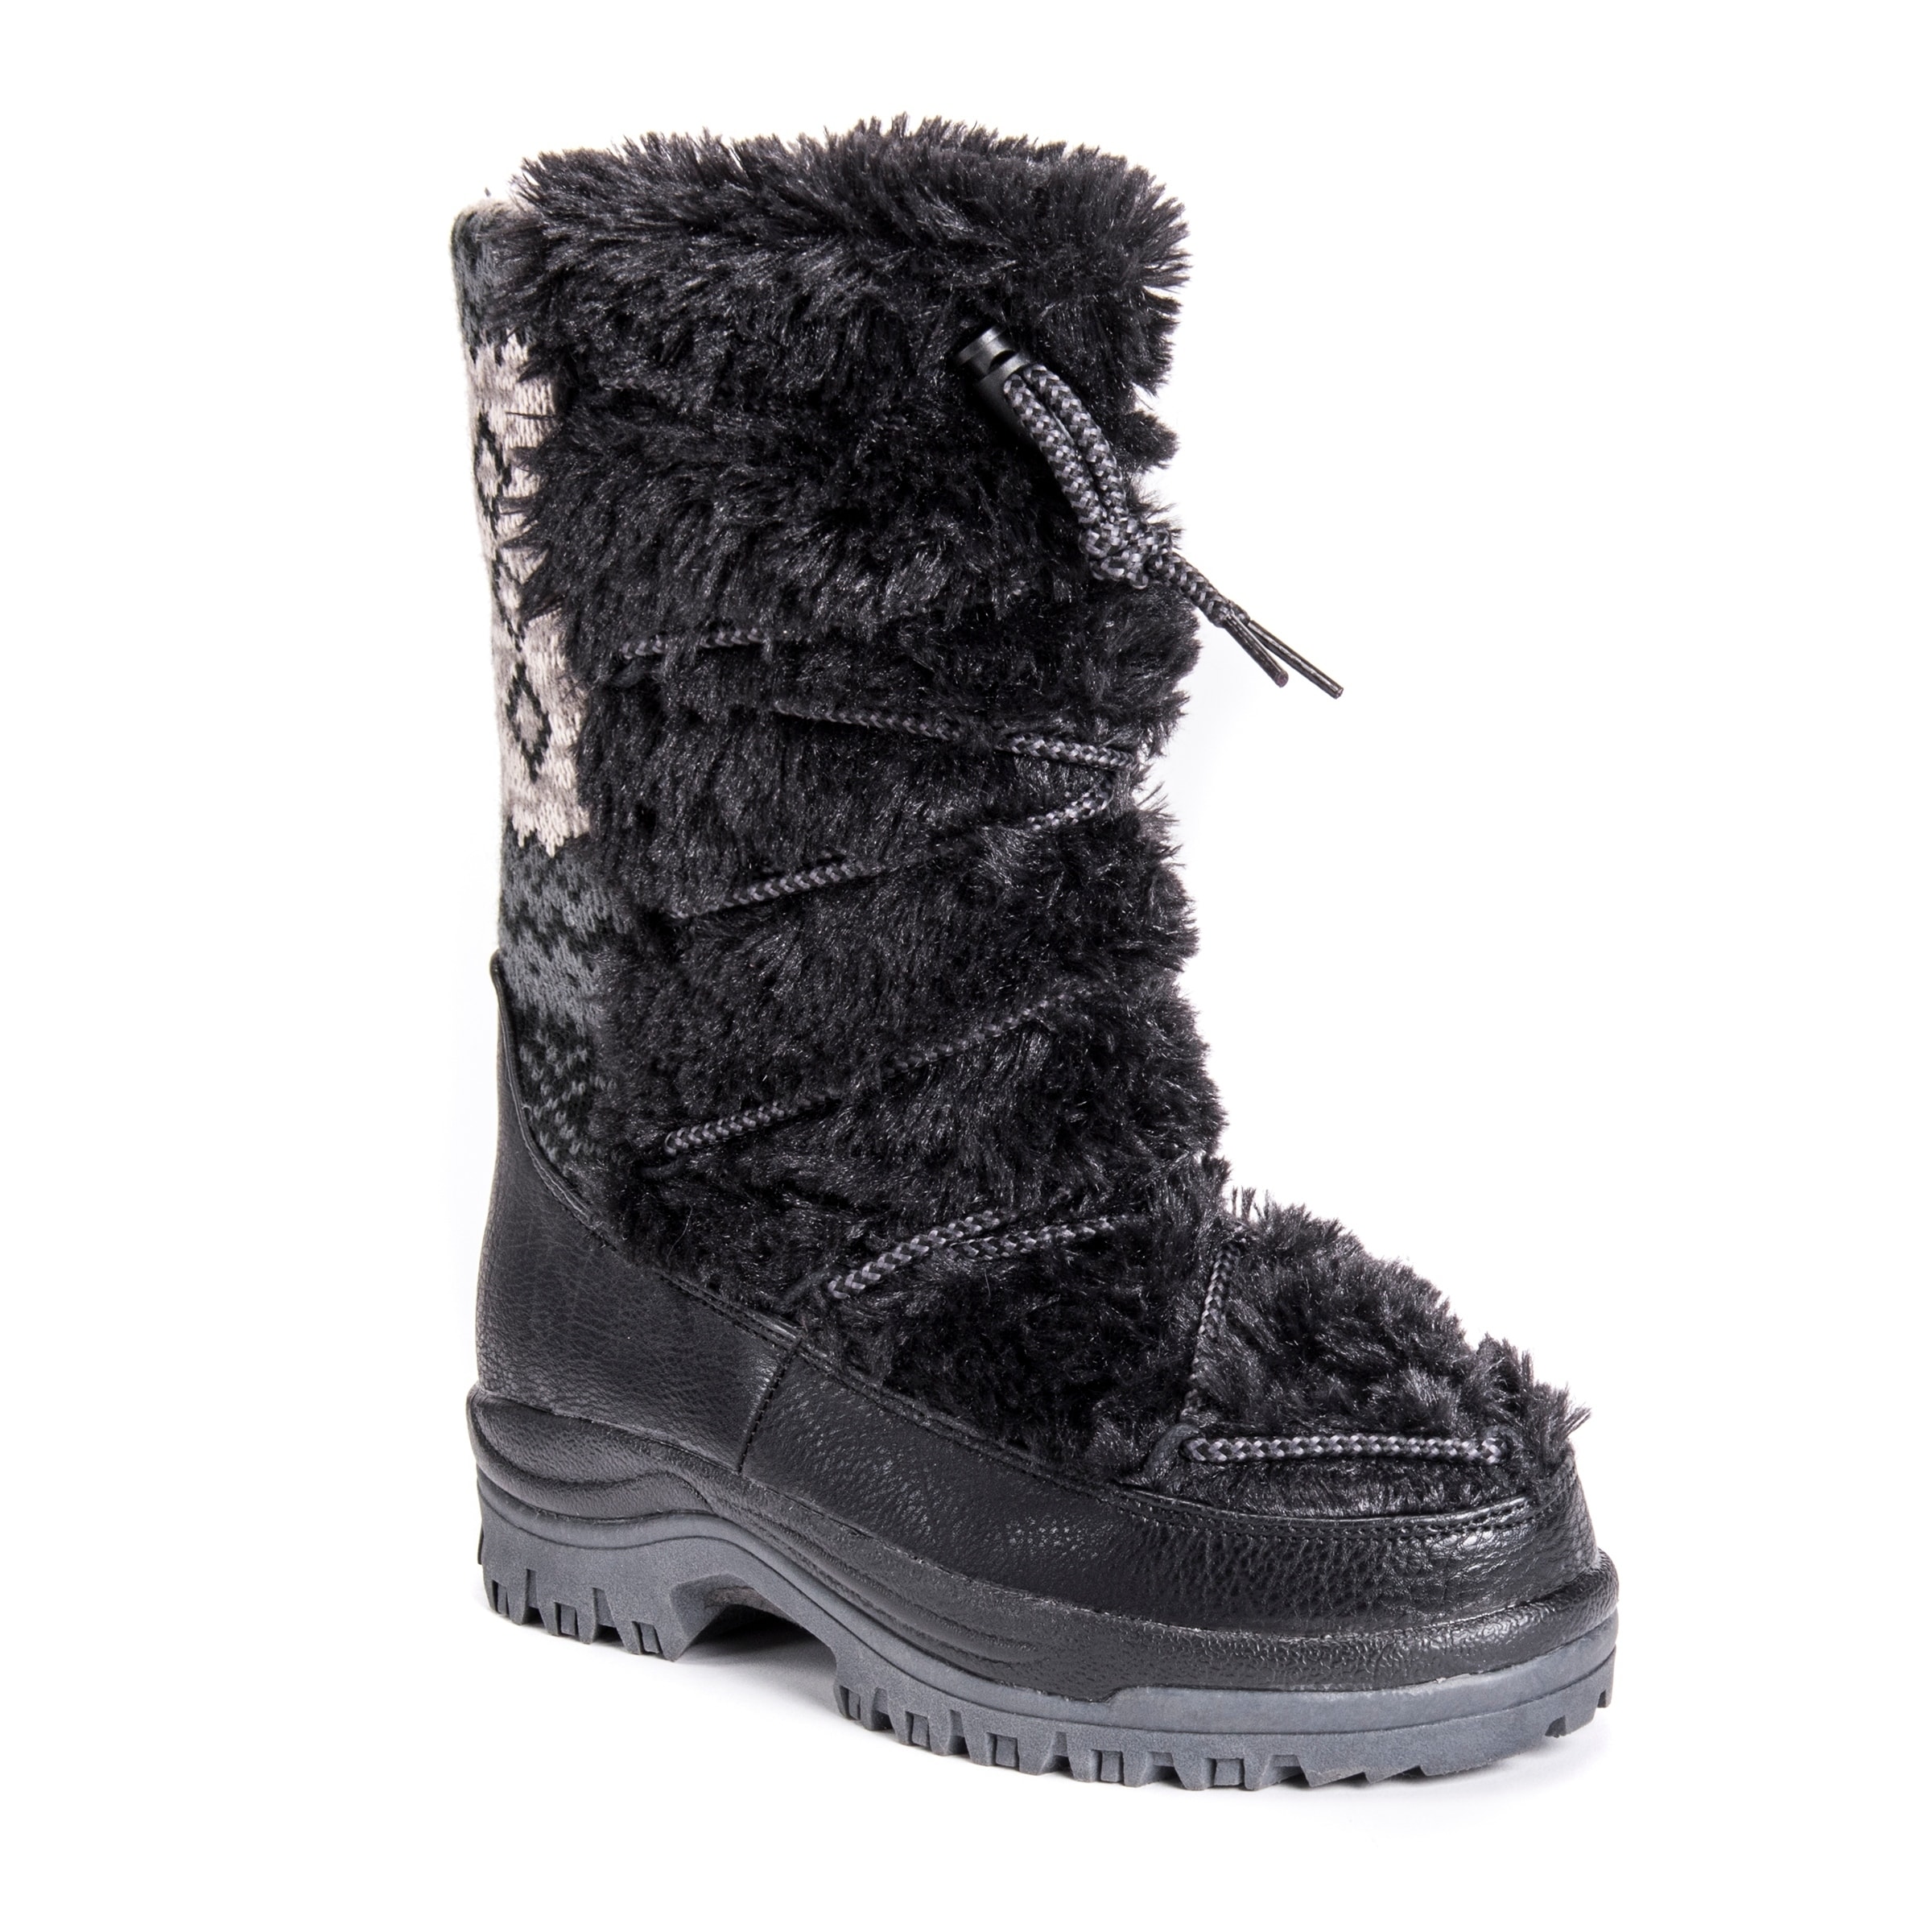 muk luks snow boots sale